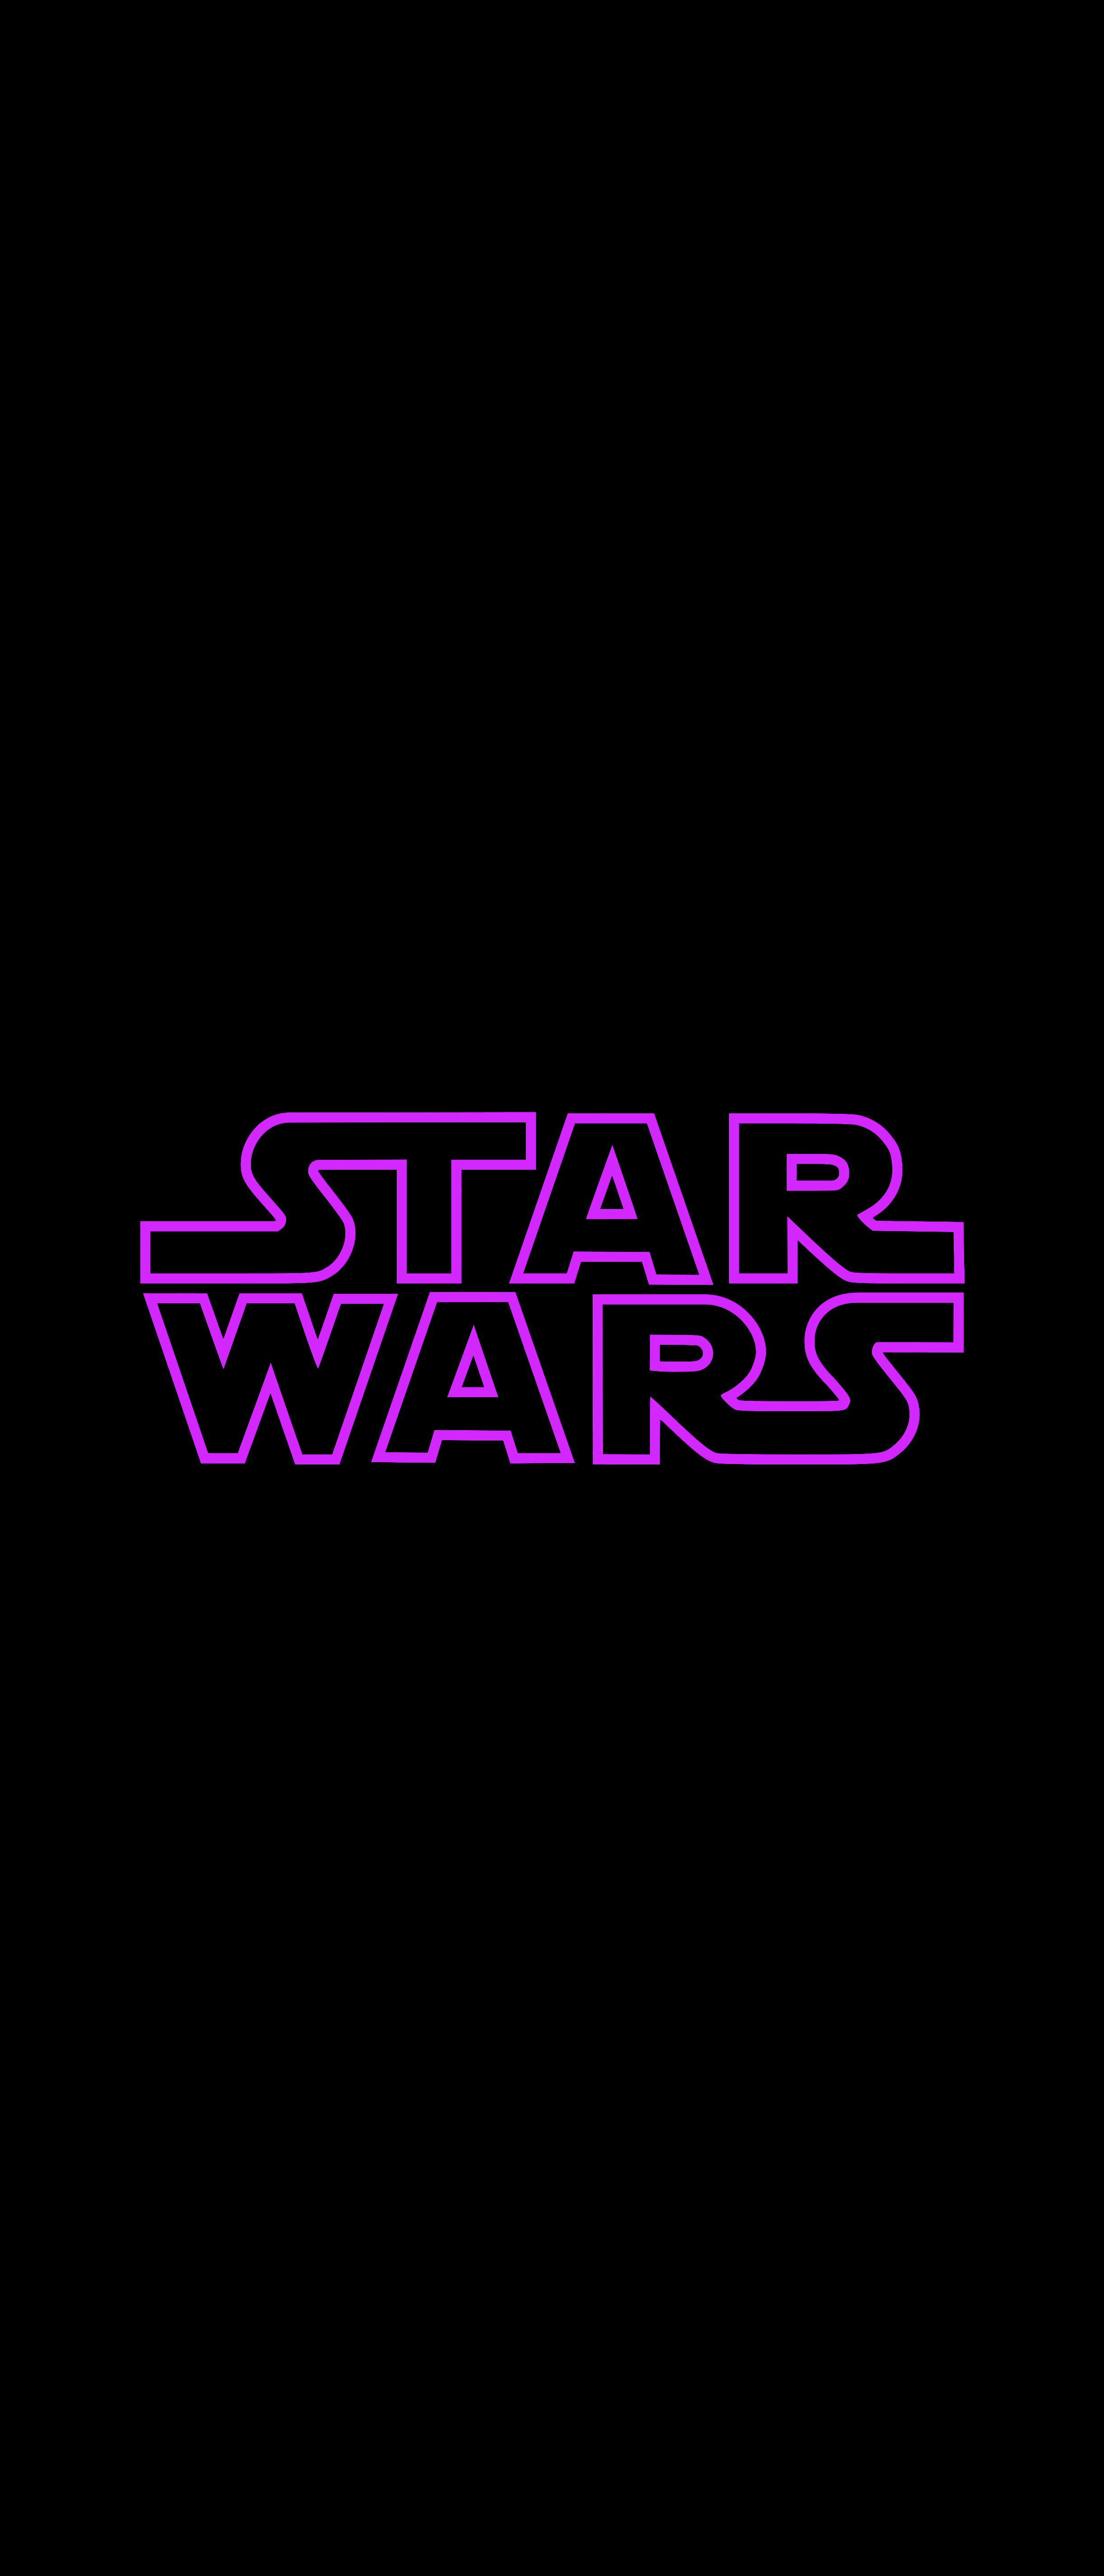 The star wars logo in purple against a black background - Star Wars